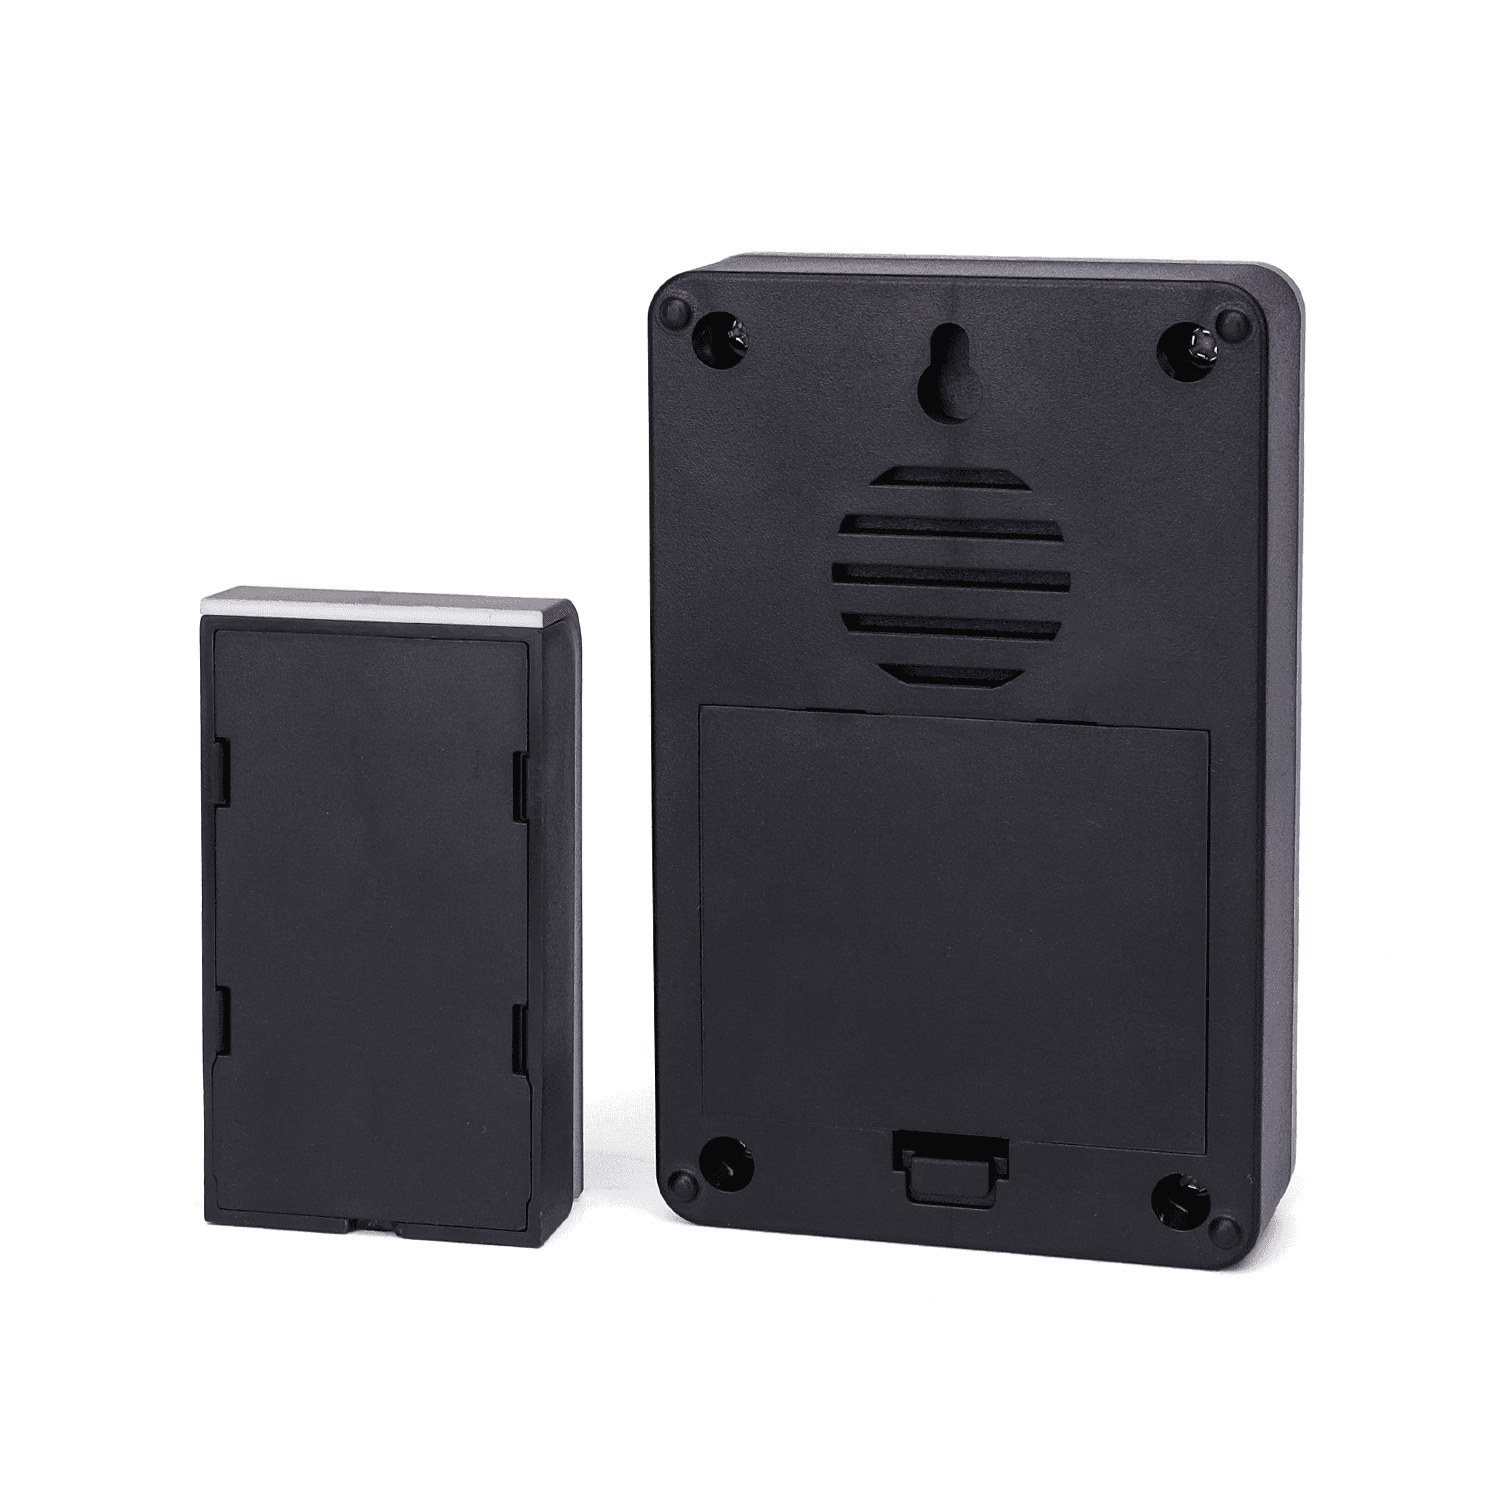 Wireless digital doorbell, two receivers - gold black